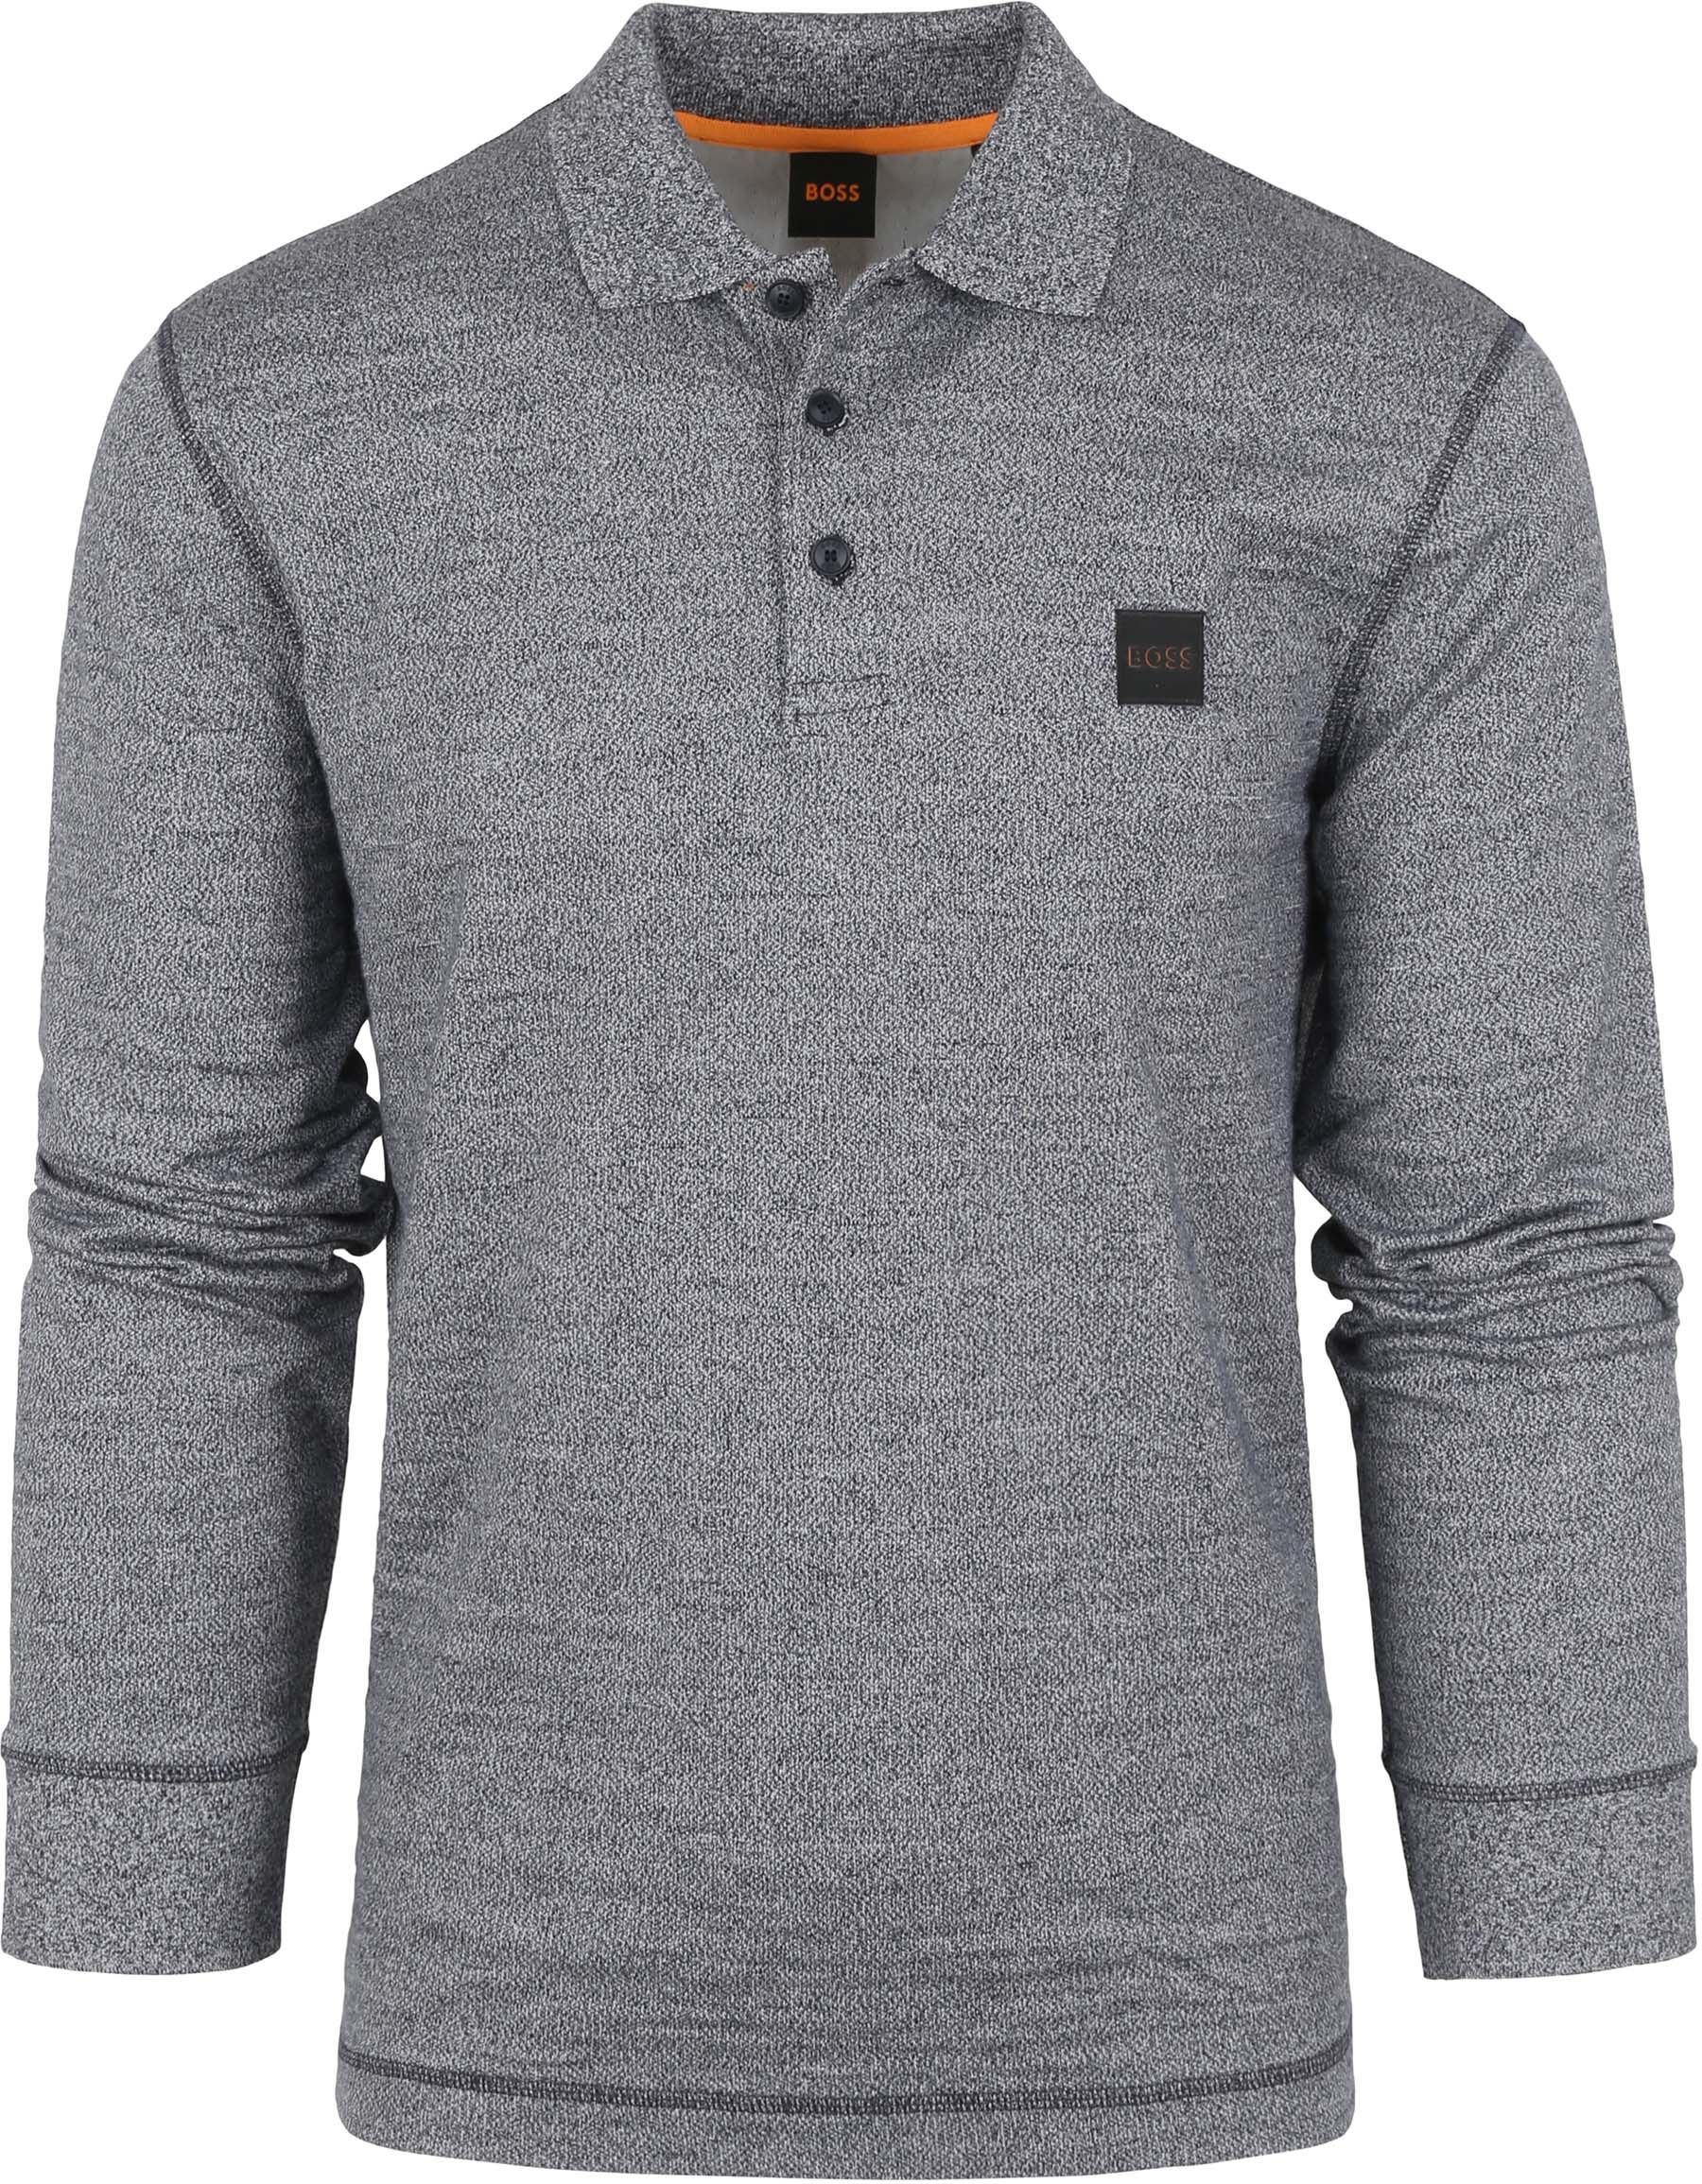 Hugo Boss Peheather LS Poloshirt Grey size 3XL